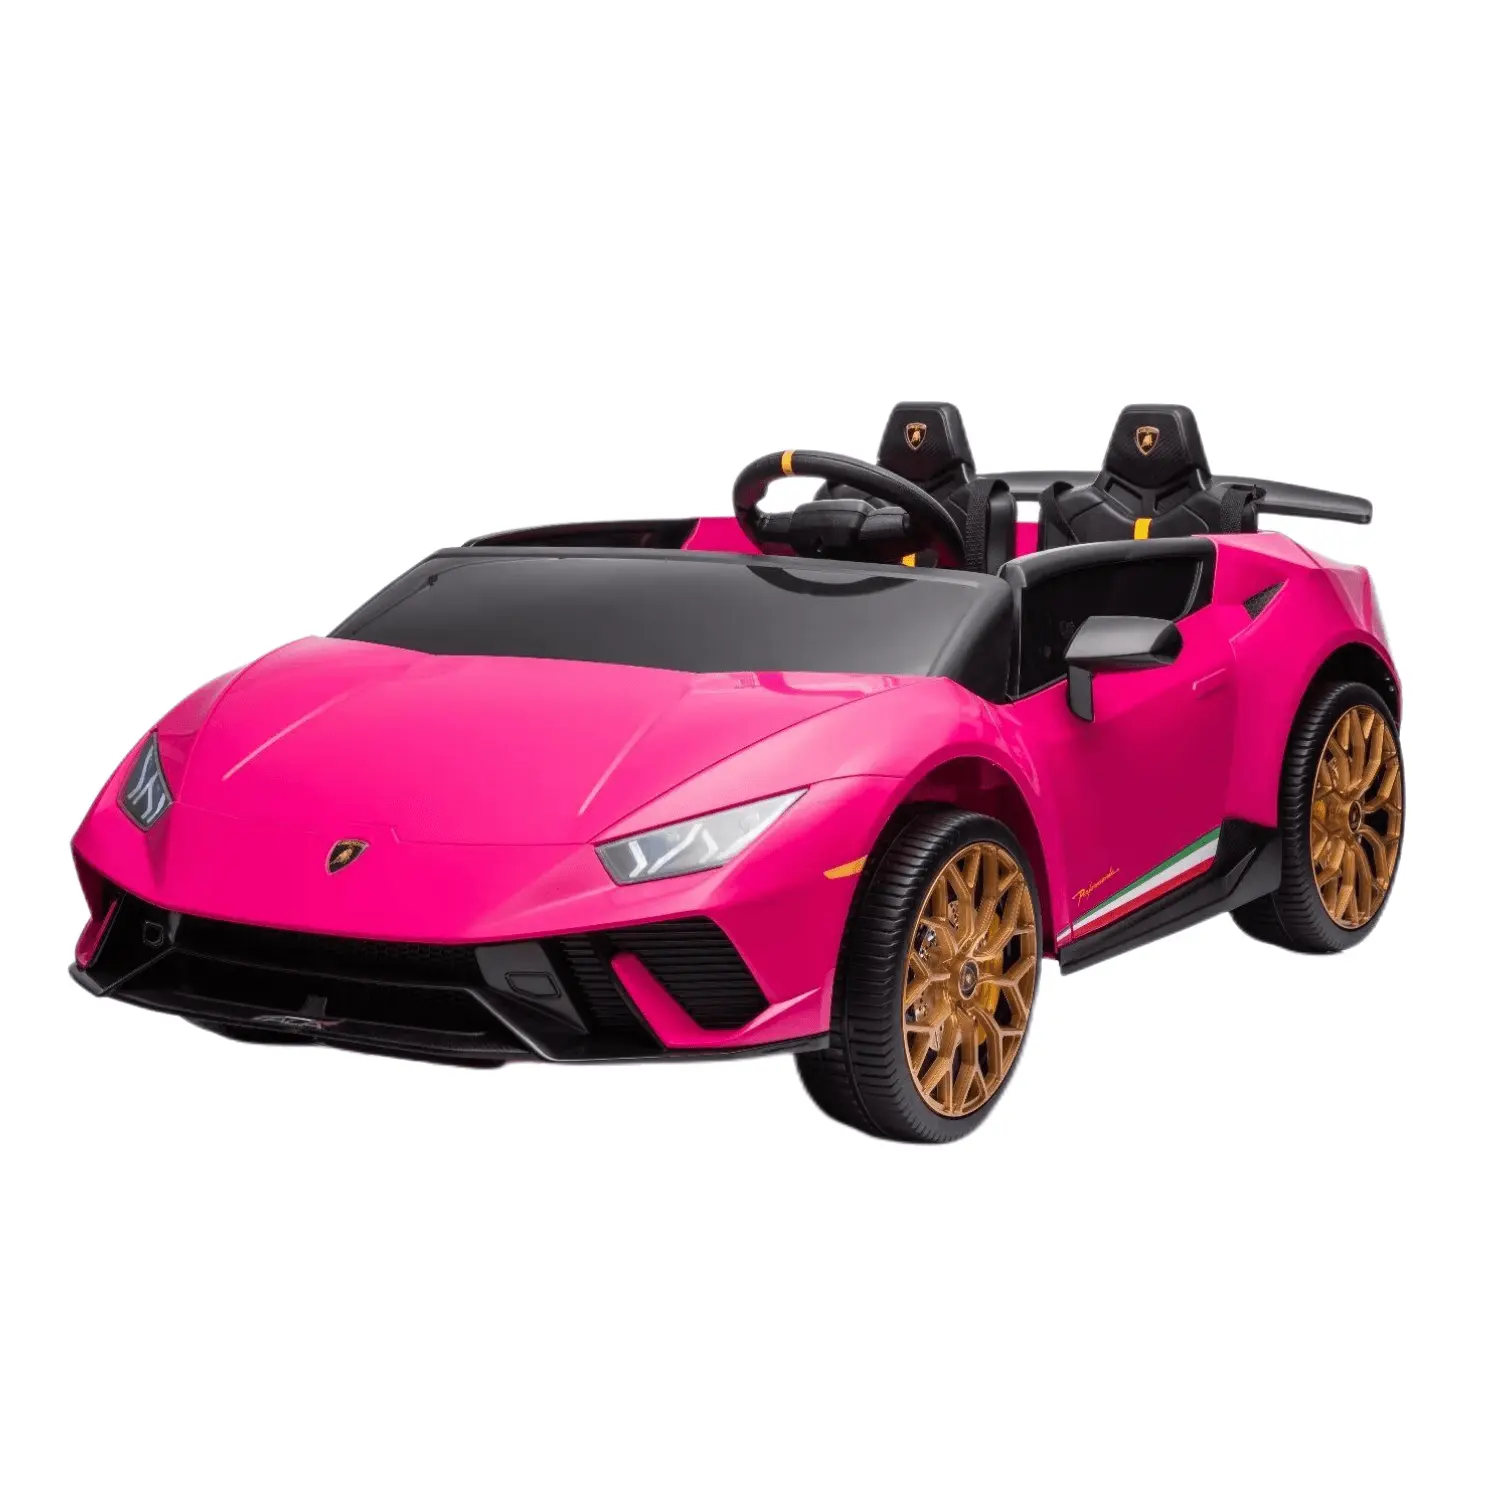 Licensed Lamborghini ride on cars pink 24v ride on car lamborghini pink Child Electric Car